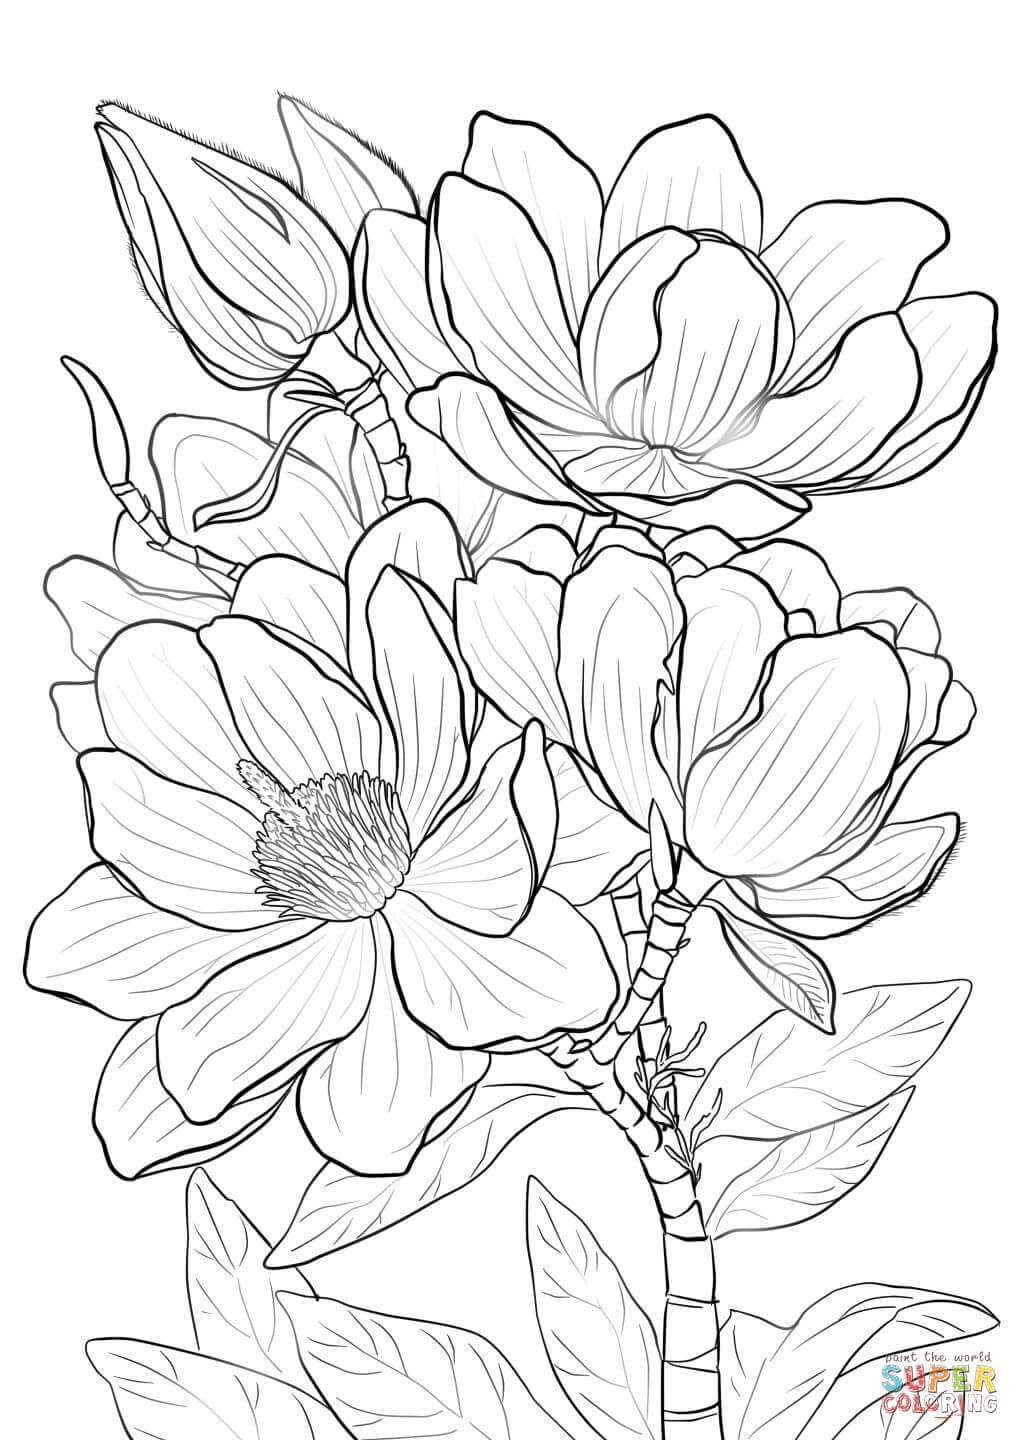 Campbells Magnolia Coloring Page